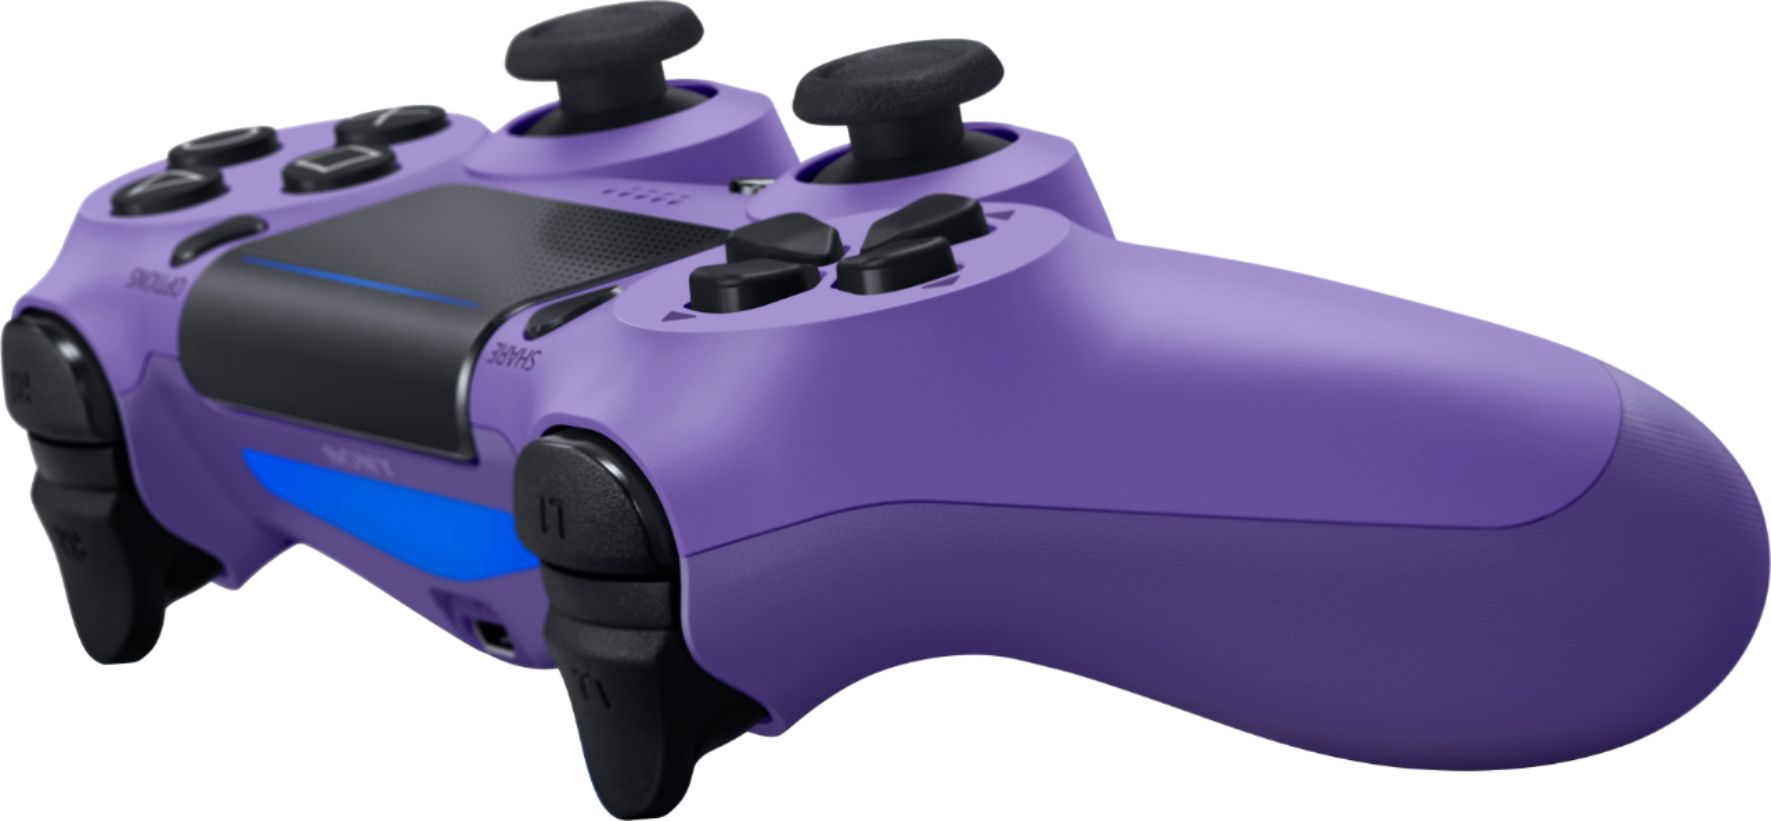 dualshock 4 v2 purple